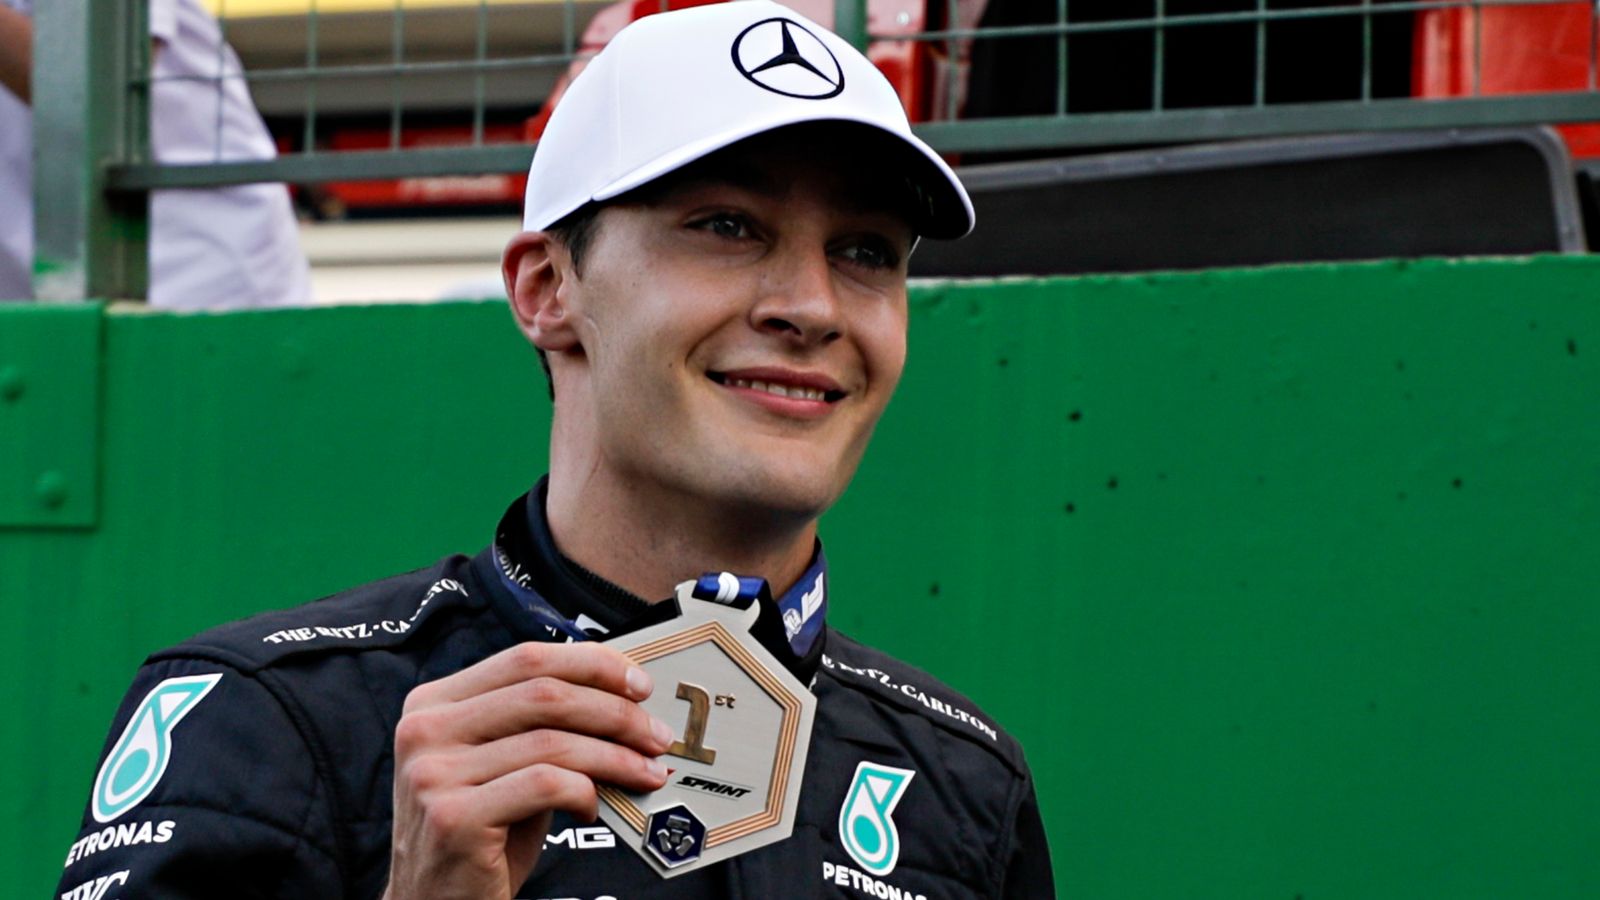 Sao Paulo GP Sprint Russell wins as Max Verstappen struggles